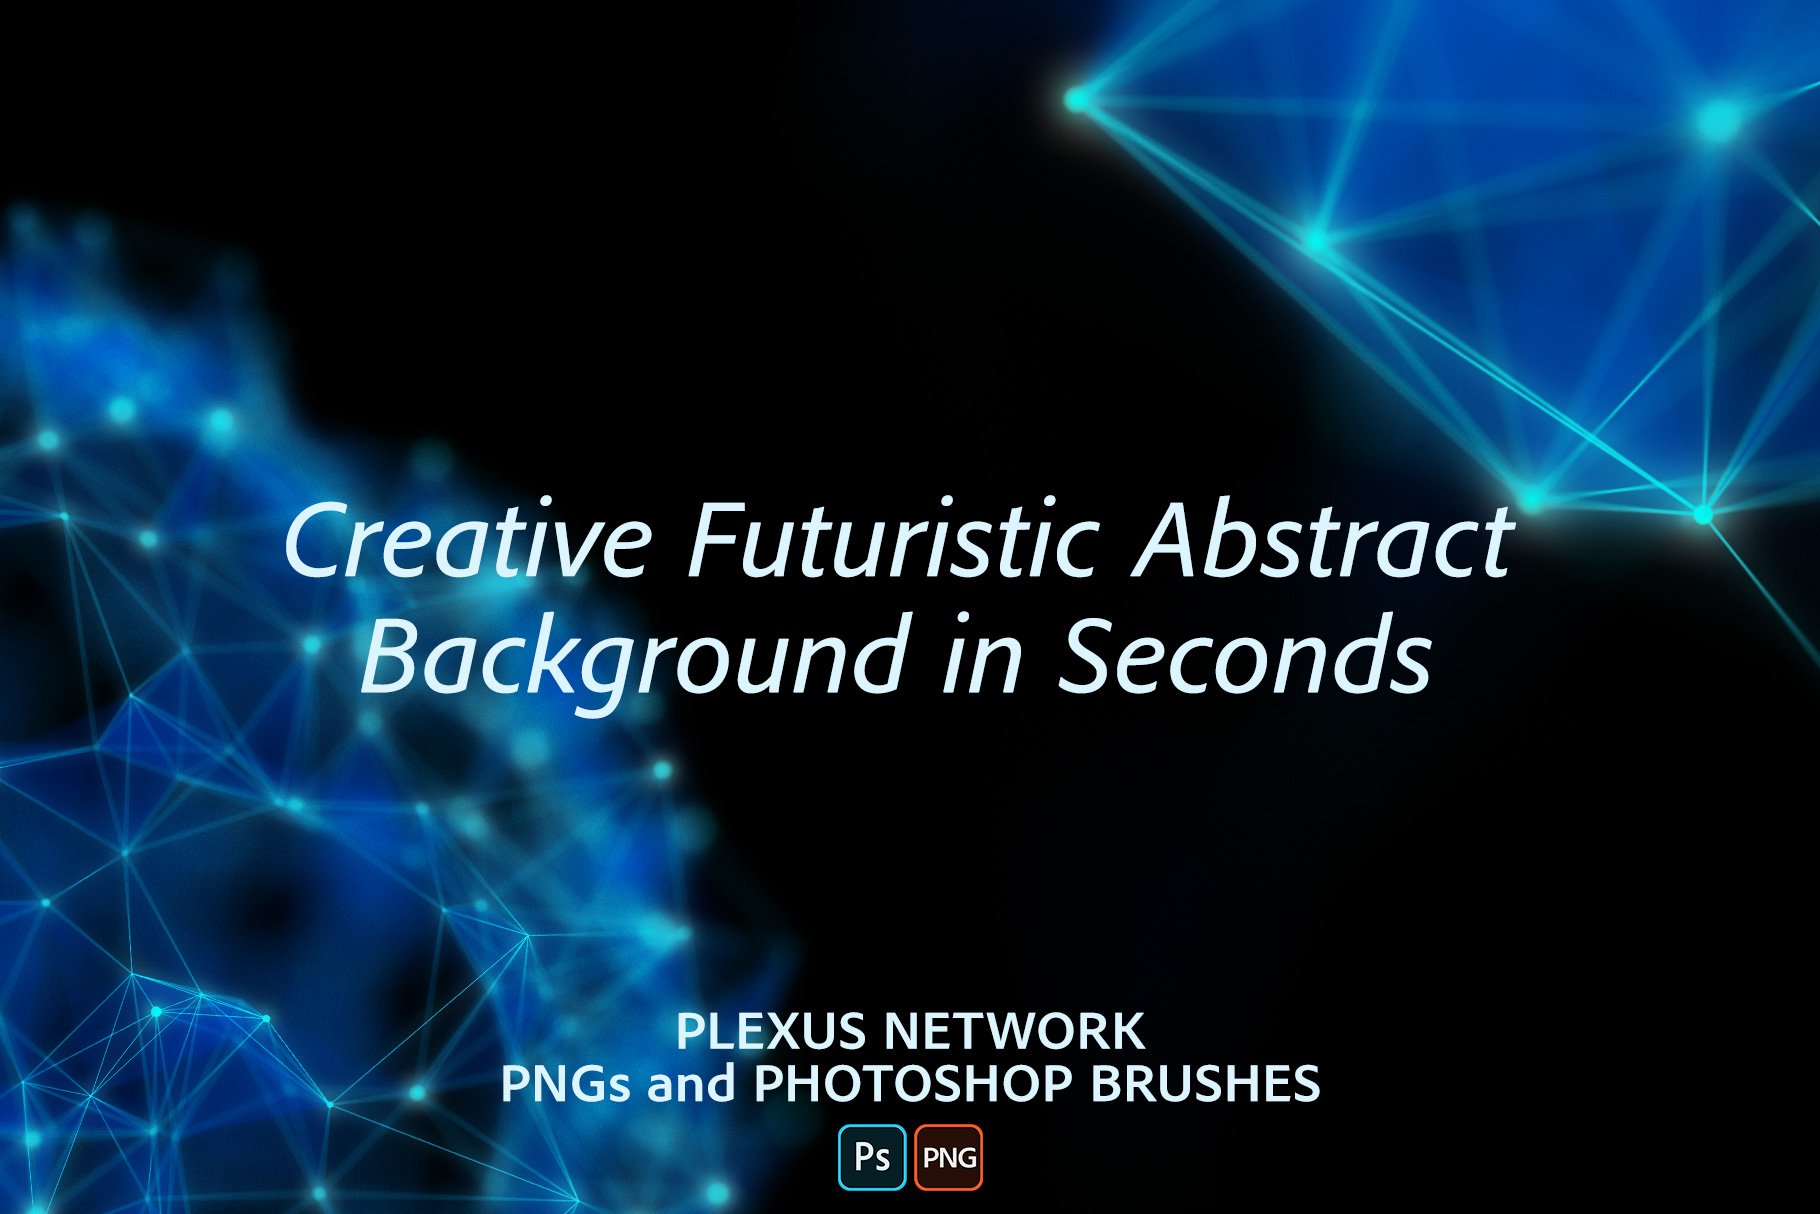 plexus network brushes for photoshop 05 713